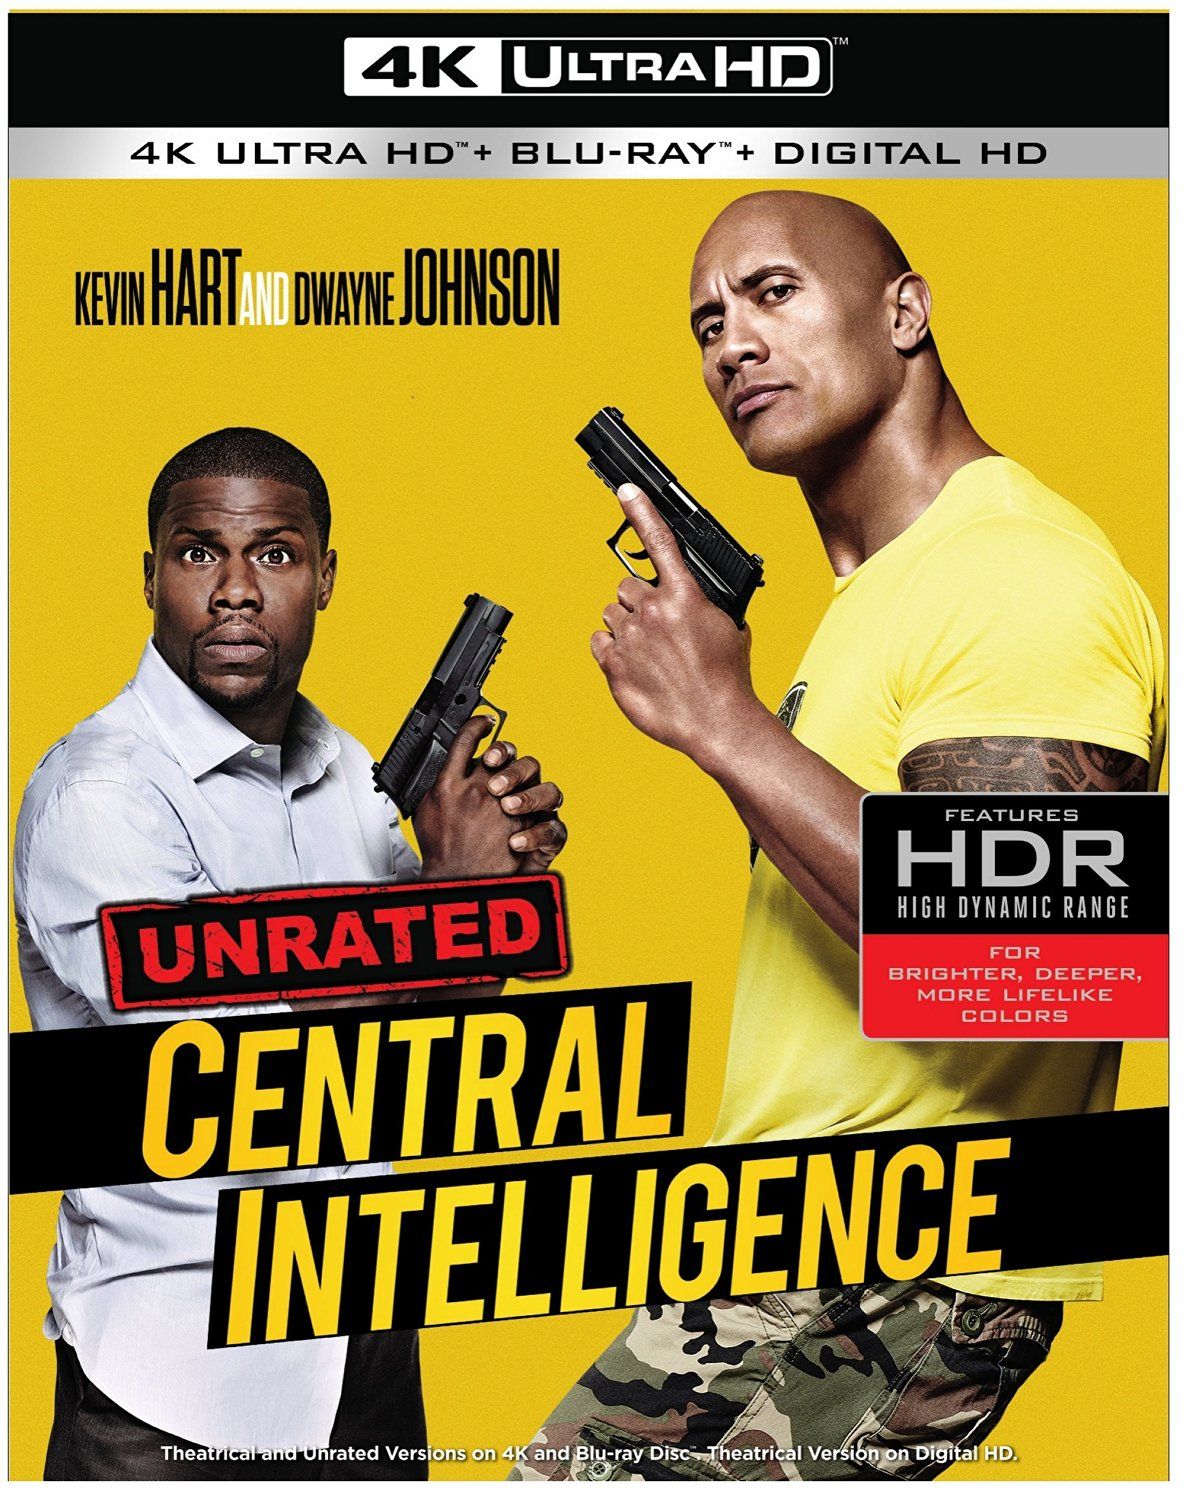 Central Intelligence 4K Ultra HD Cover. Central intelligence movie, Dwayne johnson, Blu ray movies